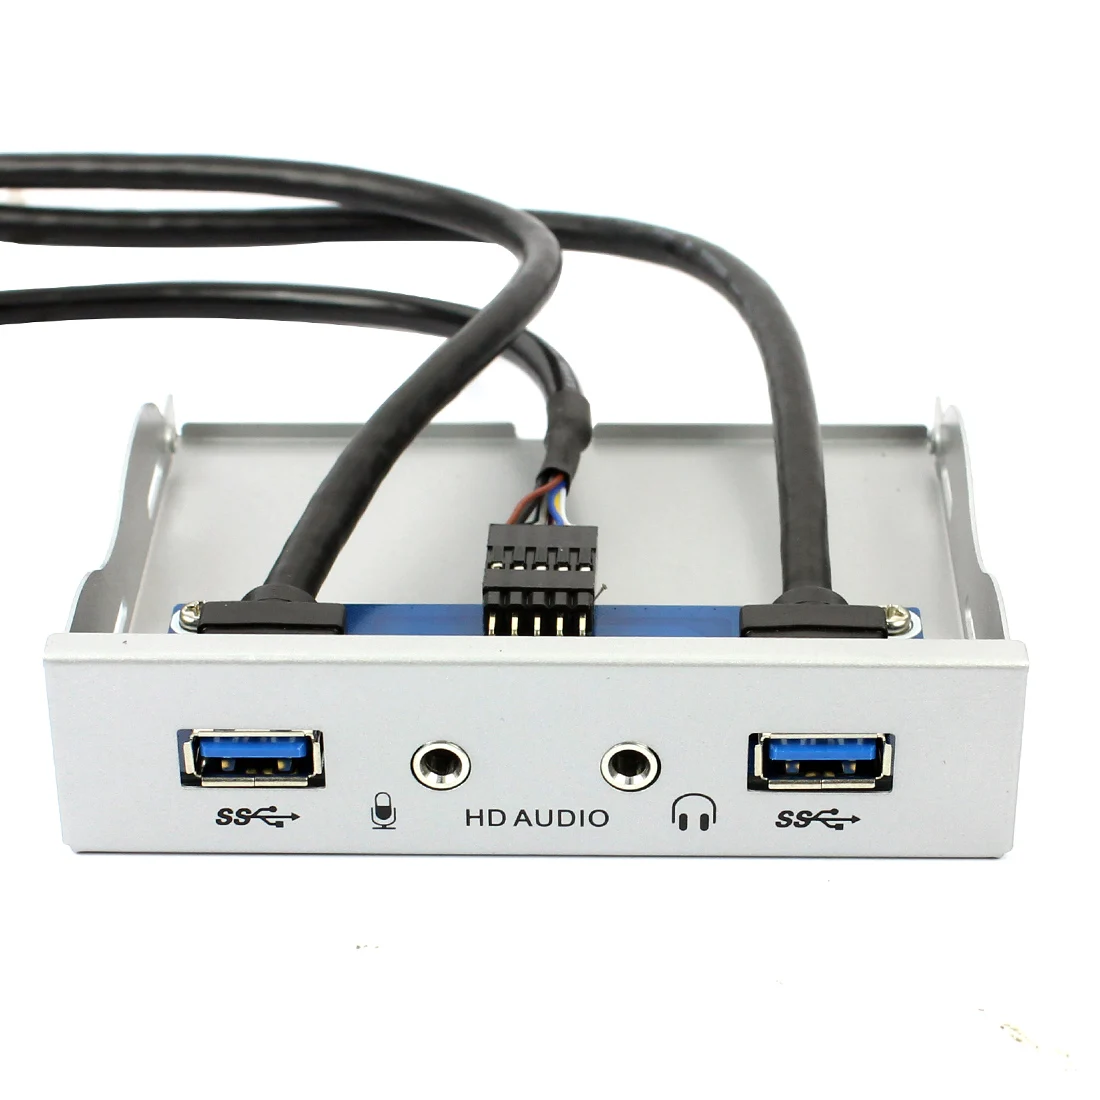 19Pin+ 9Pin 2 Порты и разъёмы usb-хаб USB 3,0 HD аудио Панель Combo кронштейн адаптер для рабочего внутренний 3," FDD Floppy Bay